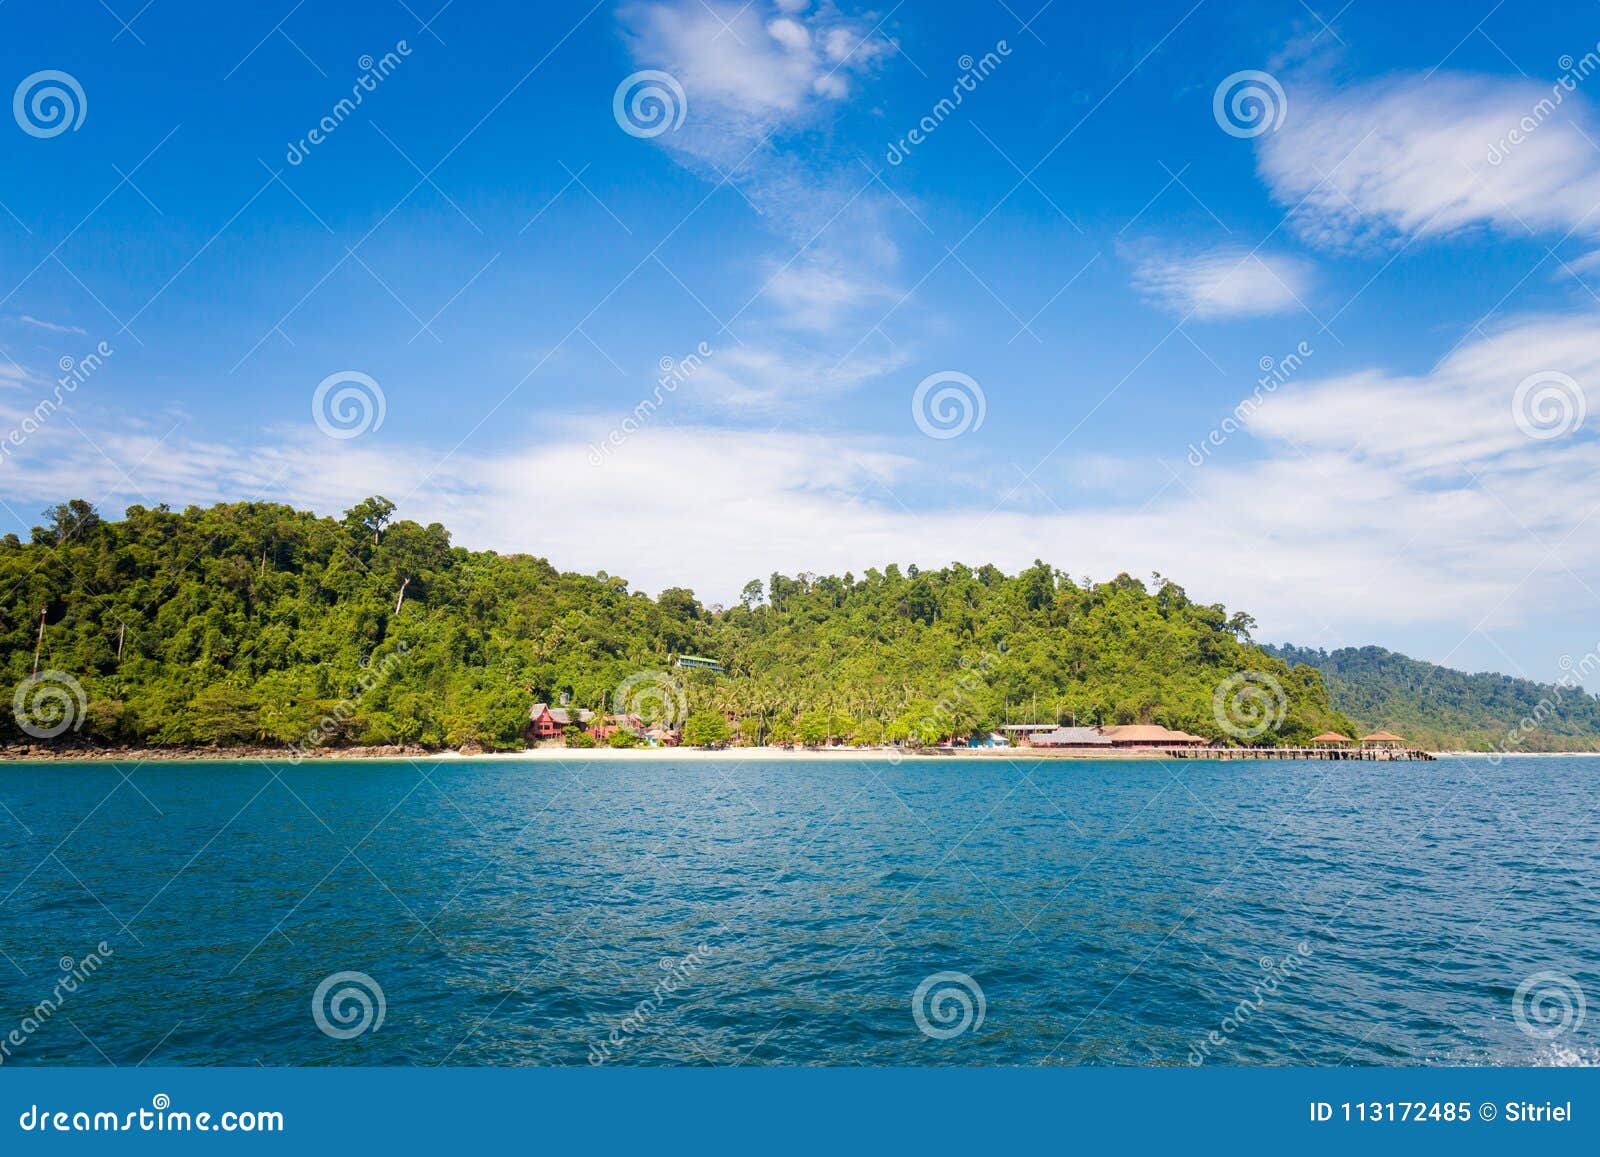 Tropical Landscape Of Koh Ngai Stock Image Image Of Beauty - 